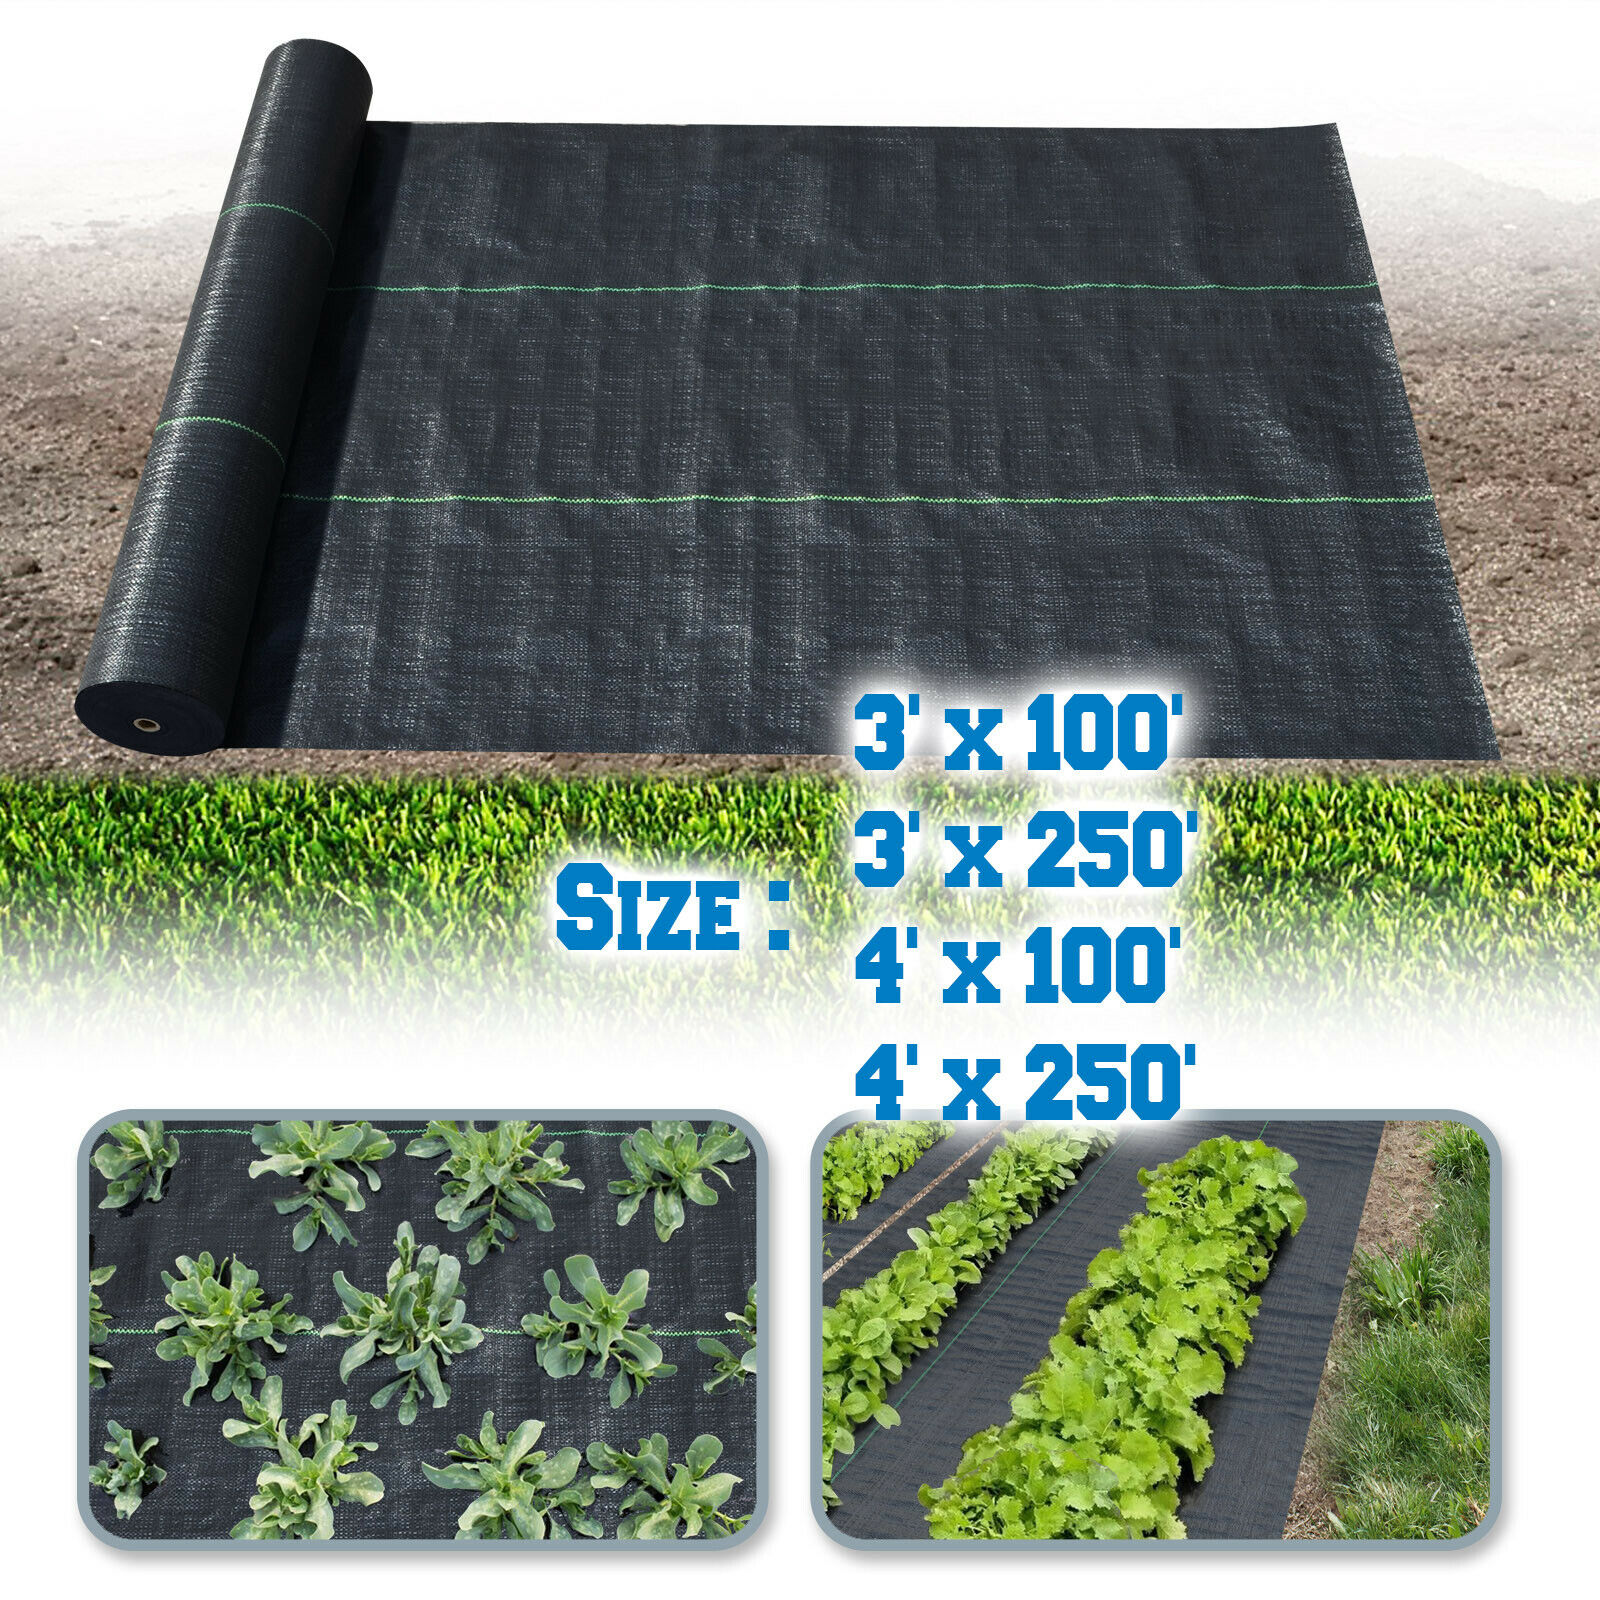 Weed Barrier Garden Landscape Fabric Durable Heavy-duty Weed Block Gardening Mat